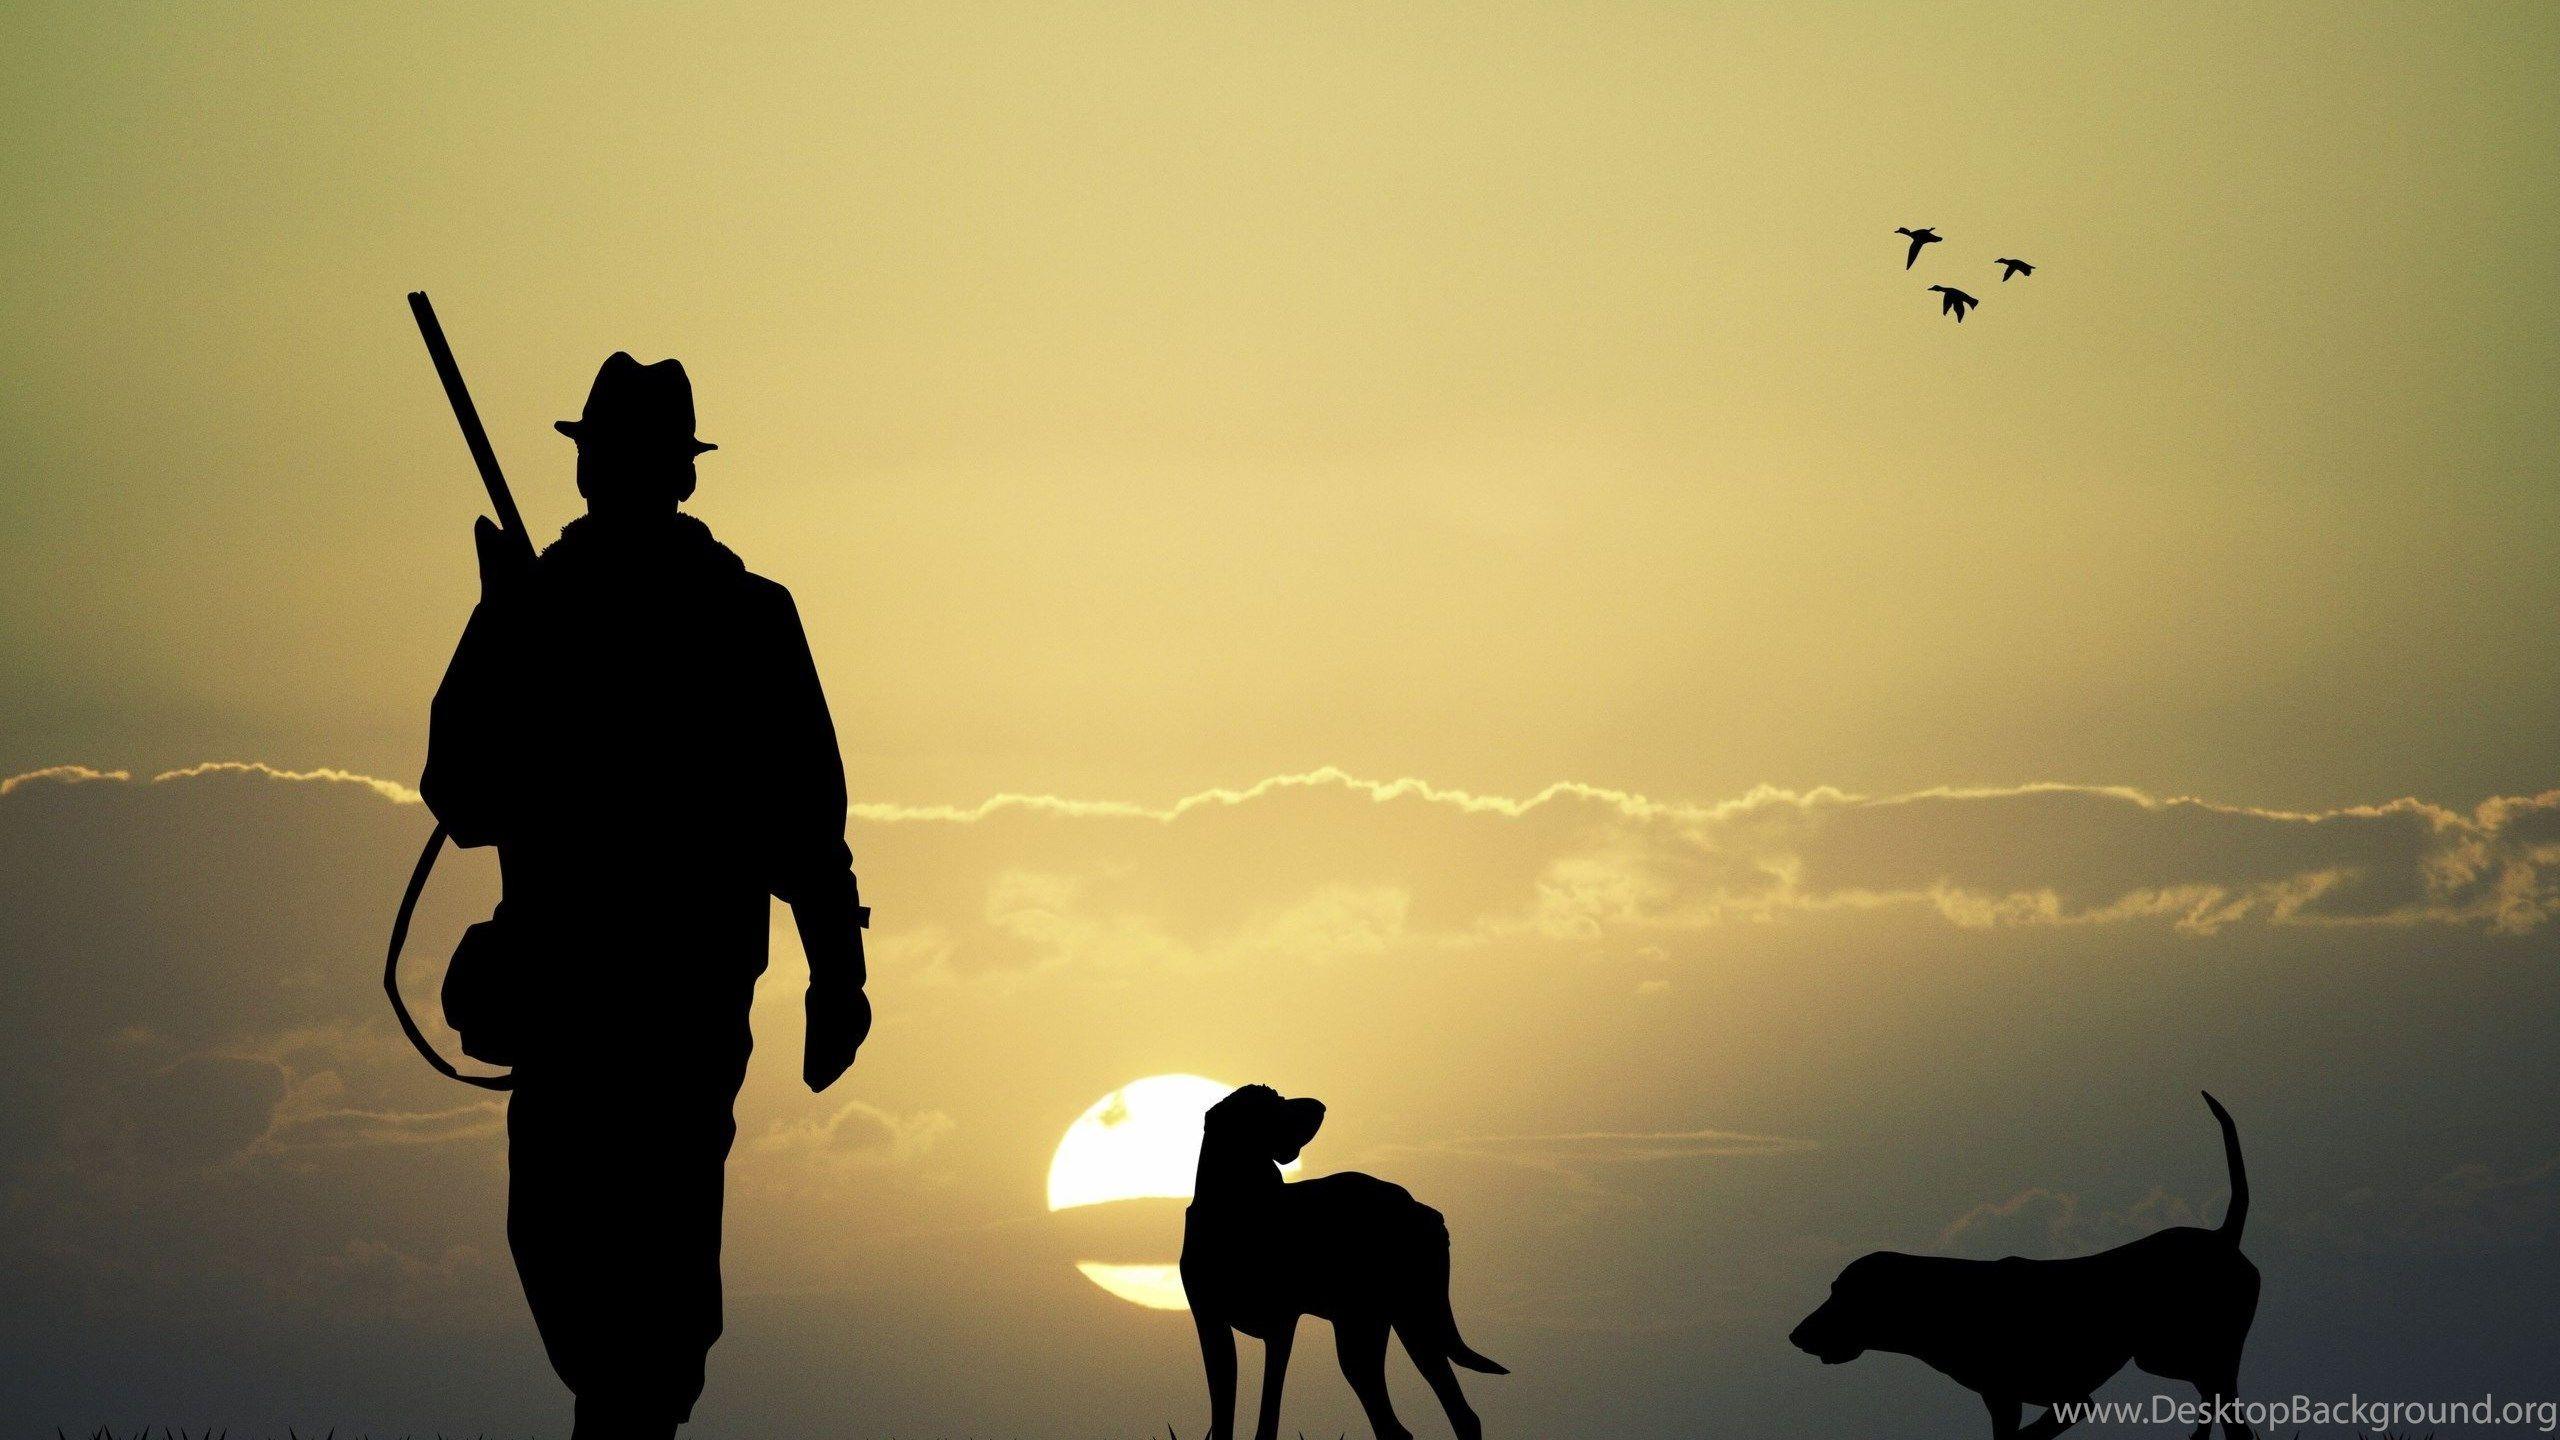 Hunting Dog Pictures  Download Free Images on Unsplash